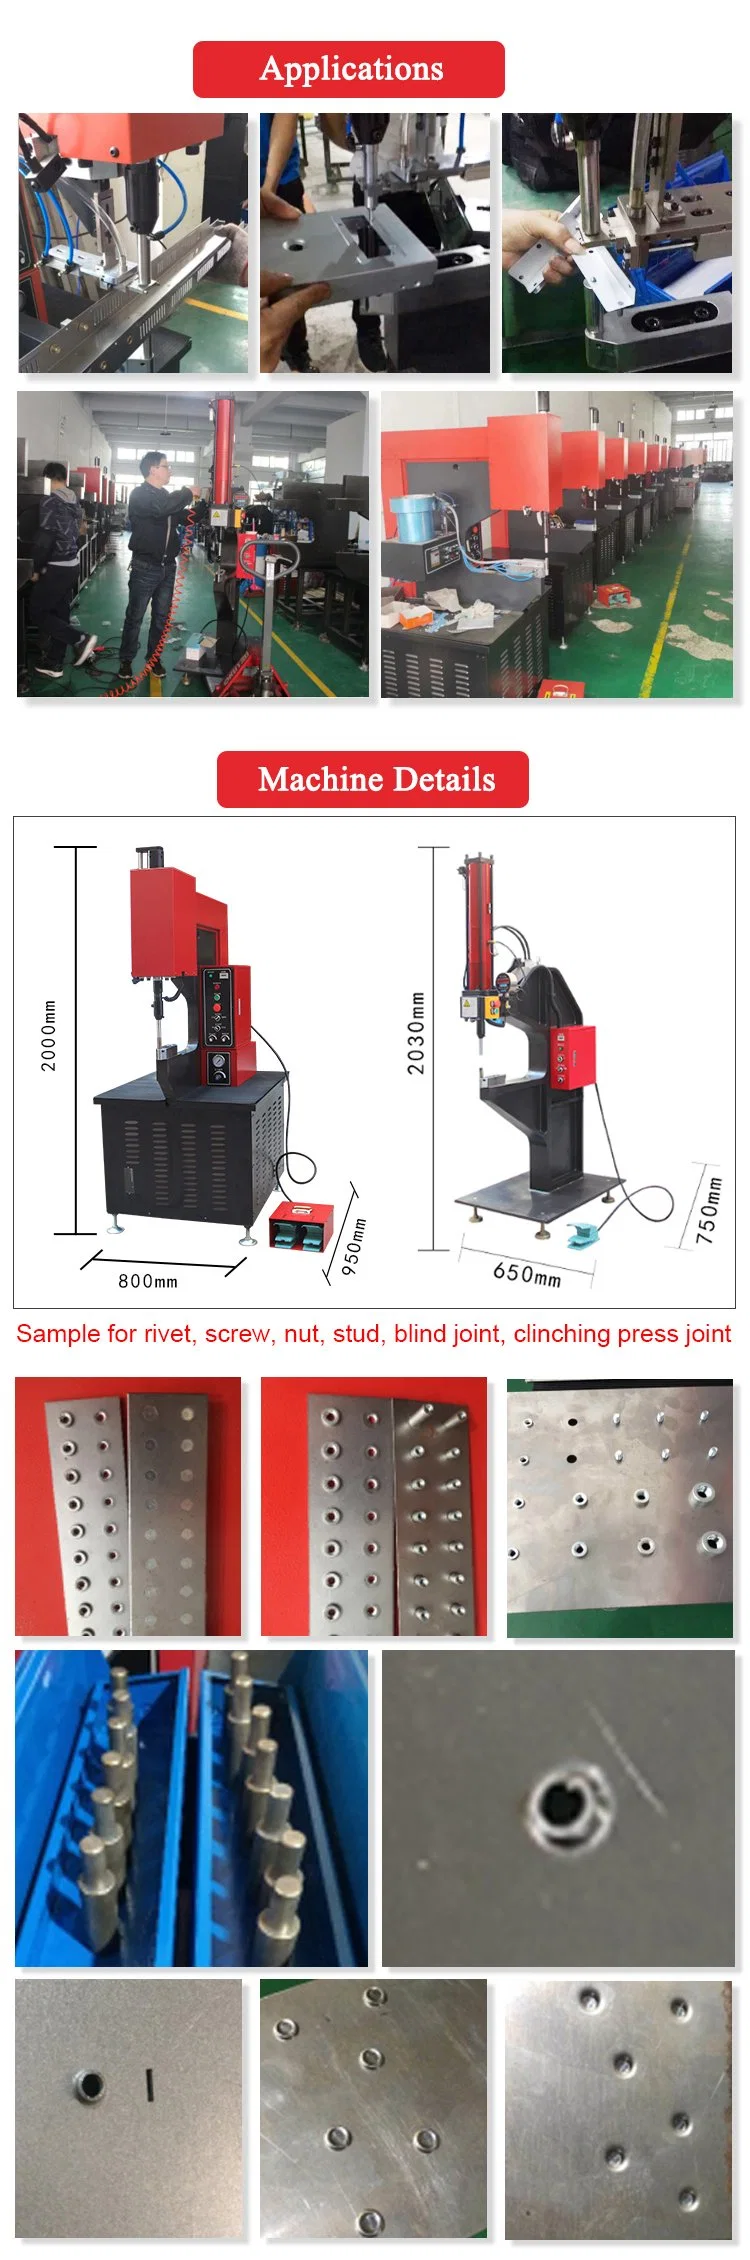 Automatic Pem Insert Riveting Press Machine for M3, M4, M6 Nuts or Standoff